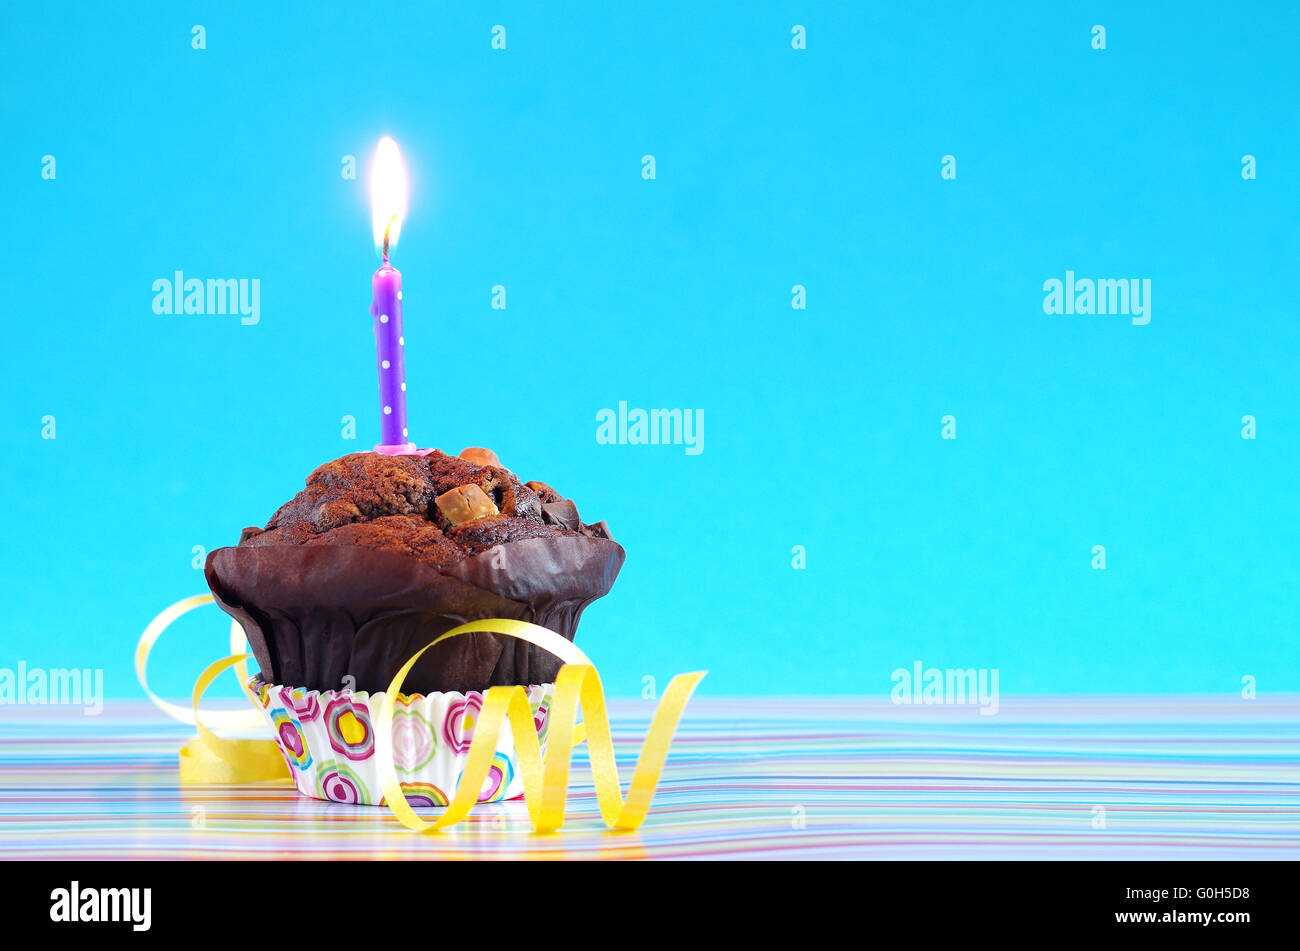 birthday cake Stock Photo